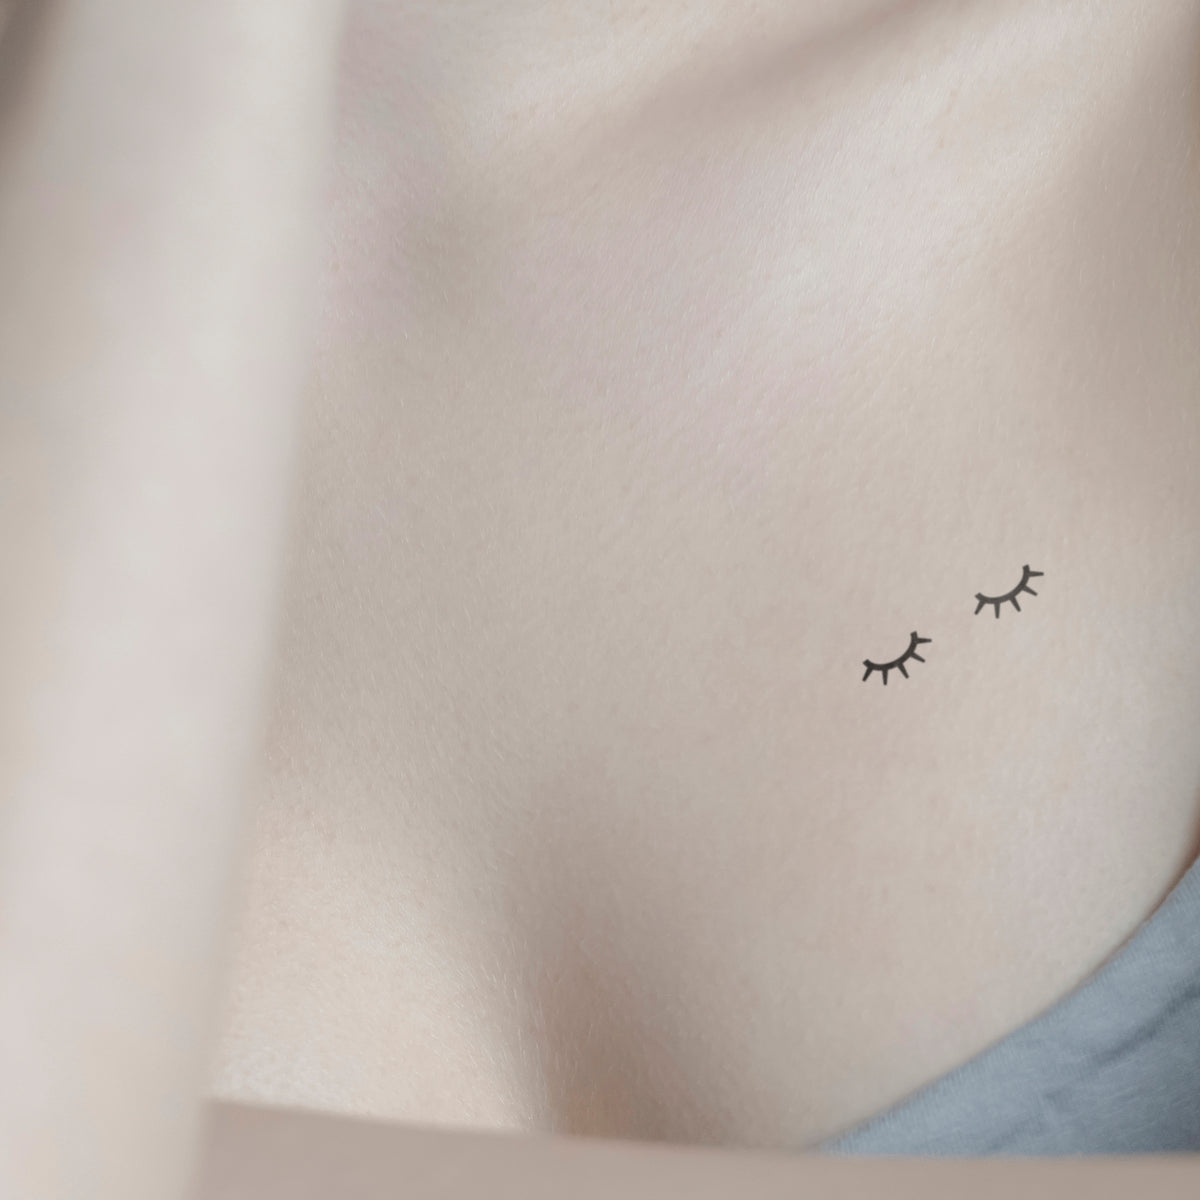 Stars and moon tattooed on the collarbone, minimalistic